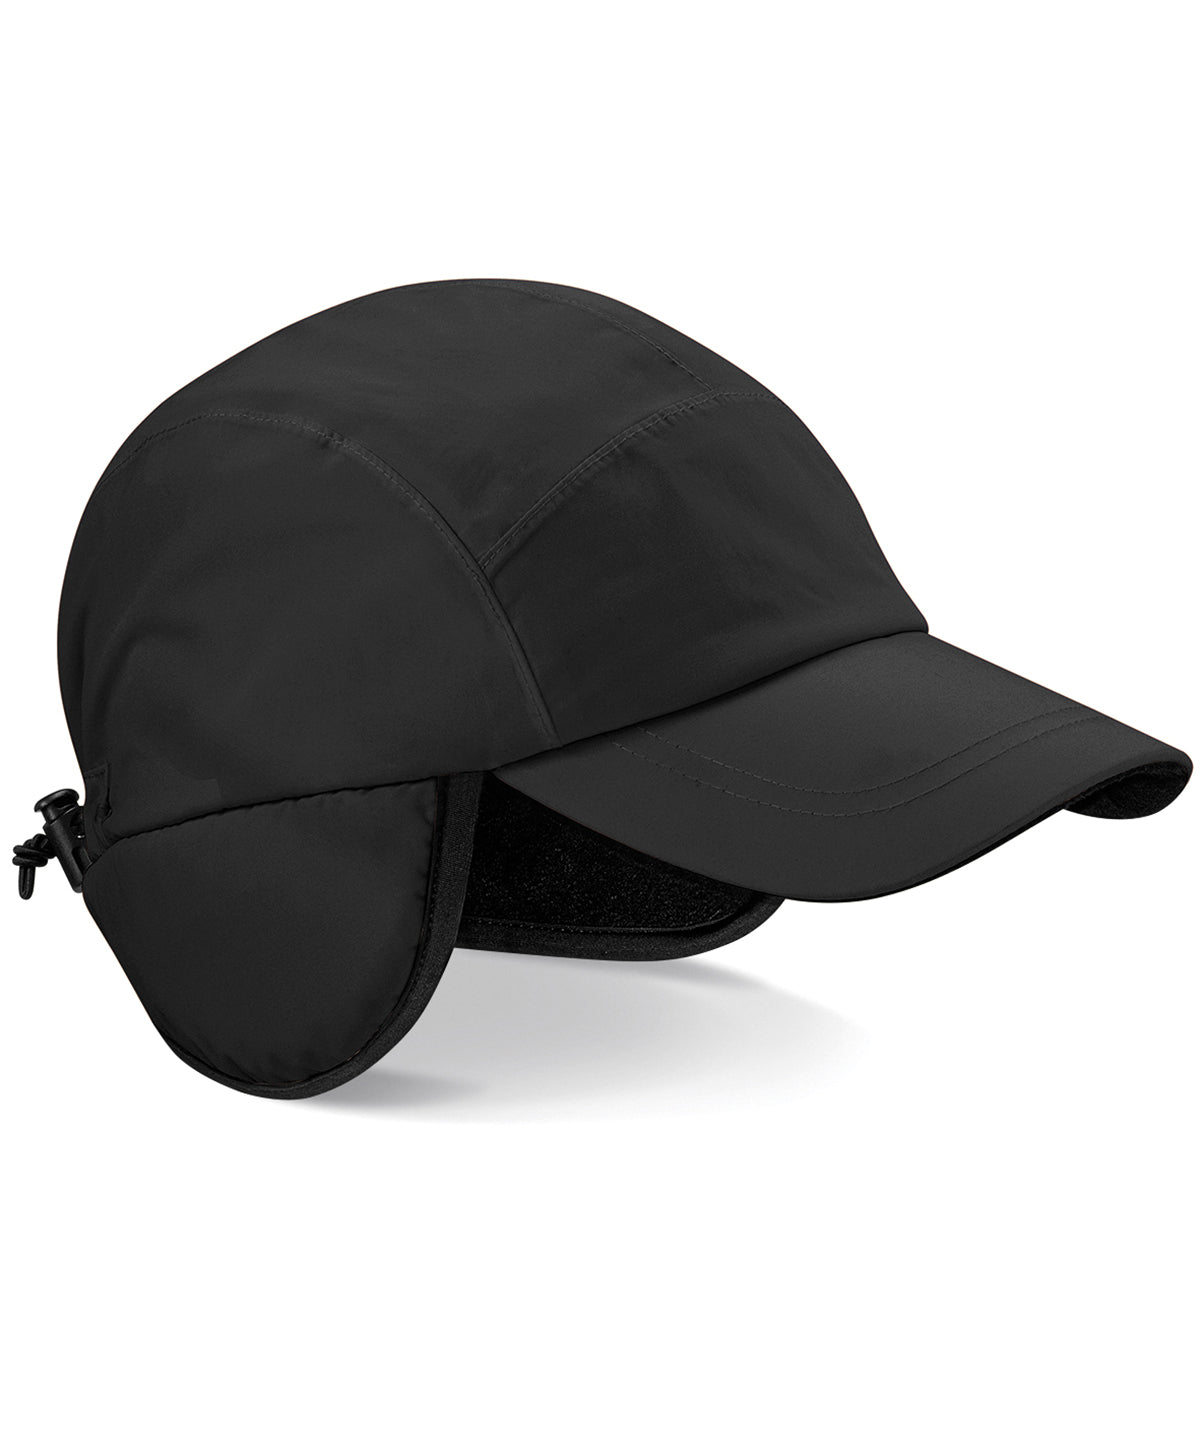 Personalised Caps - Black Beechfield Mountain cap